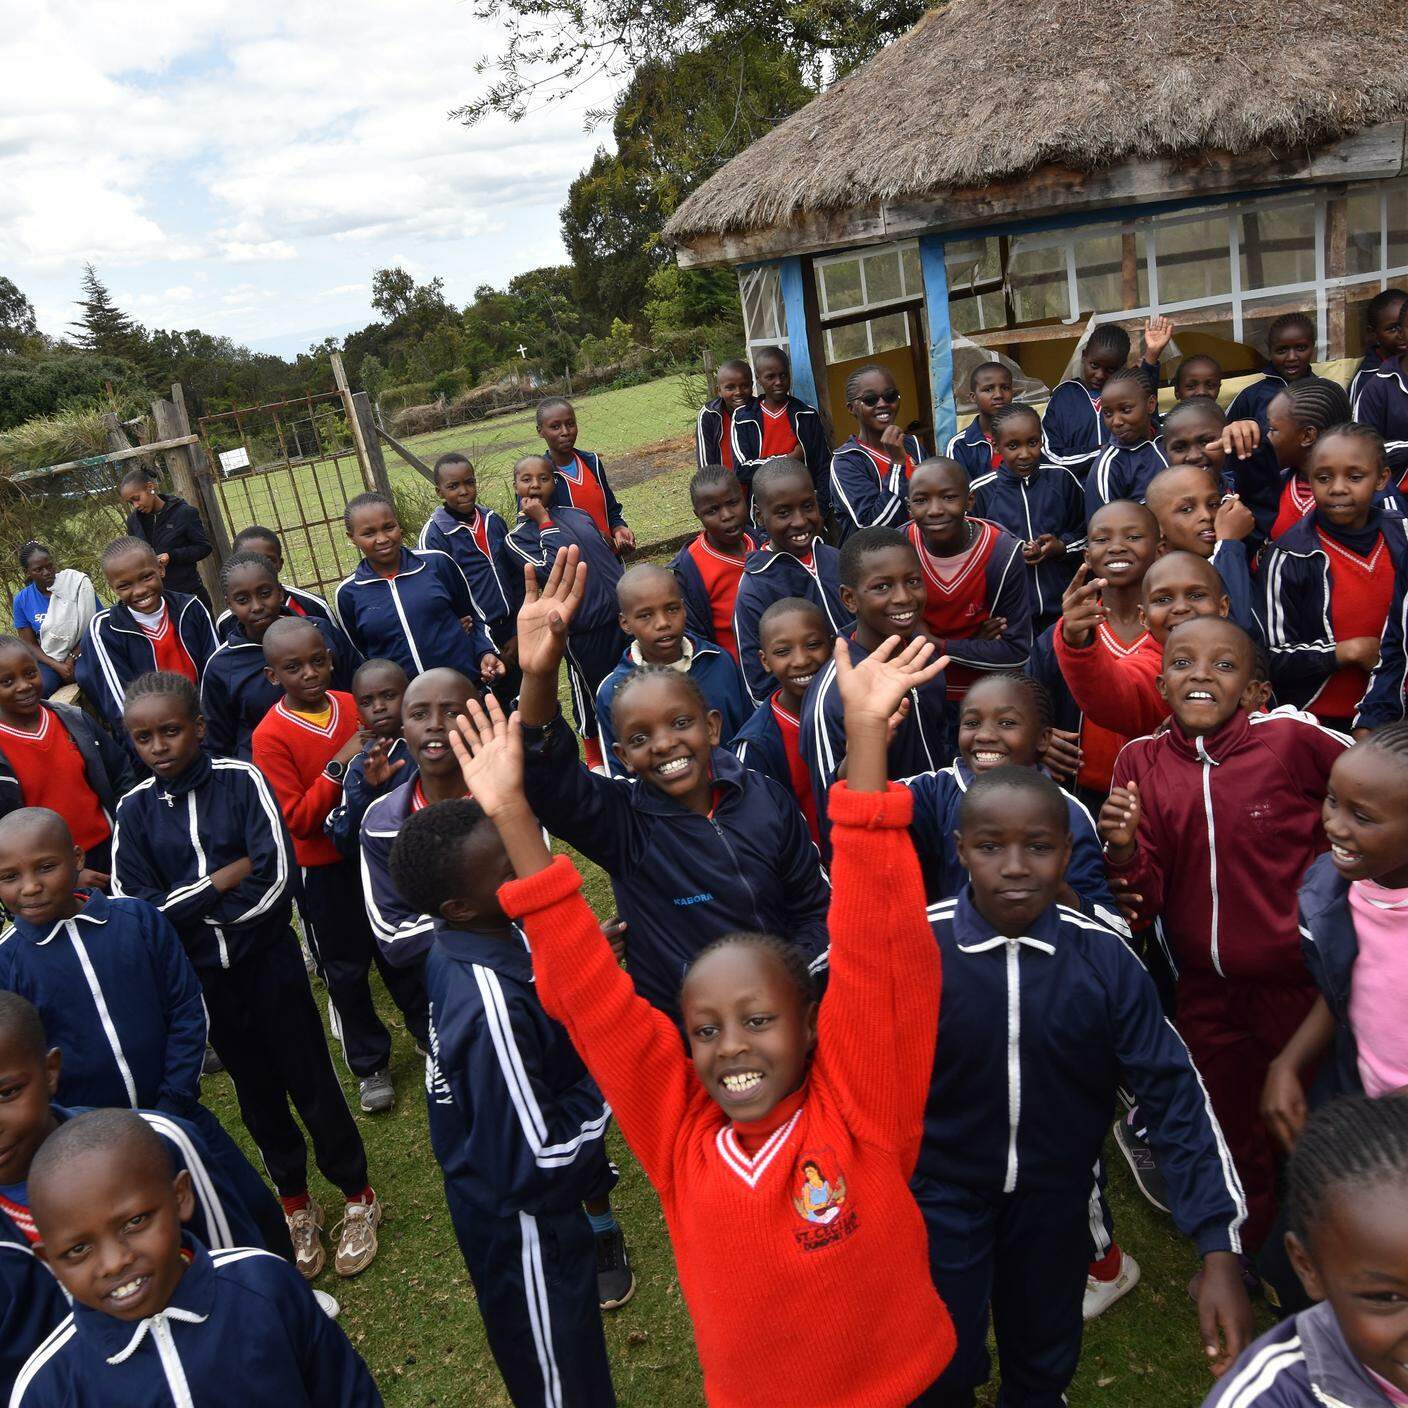 St Cecilia Community Learning Centre, Dundori - Kenia